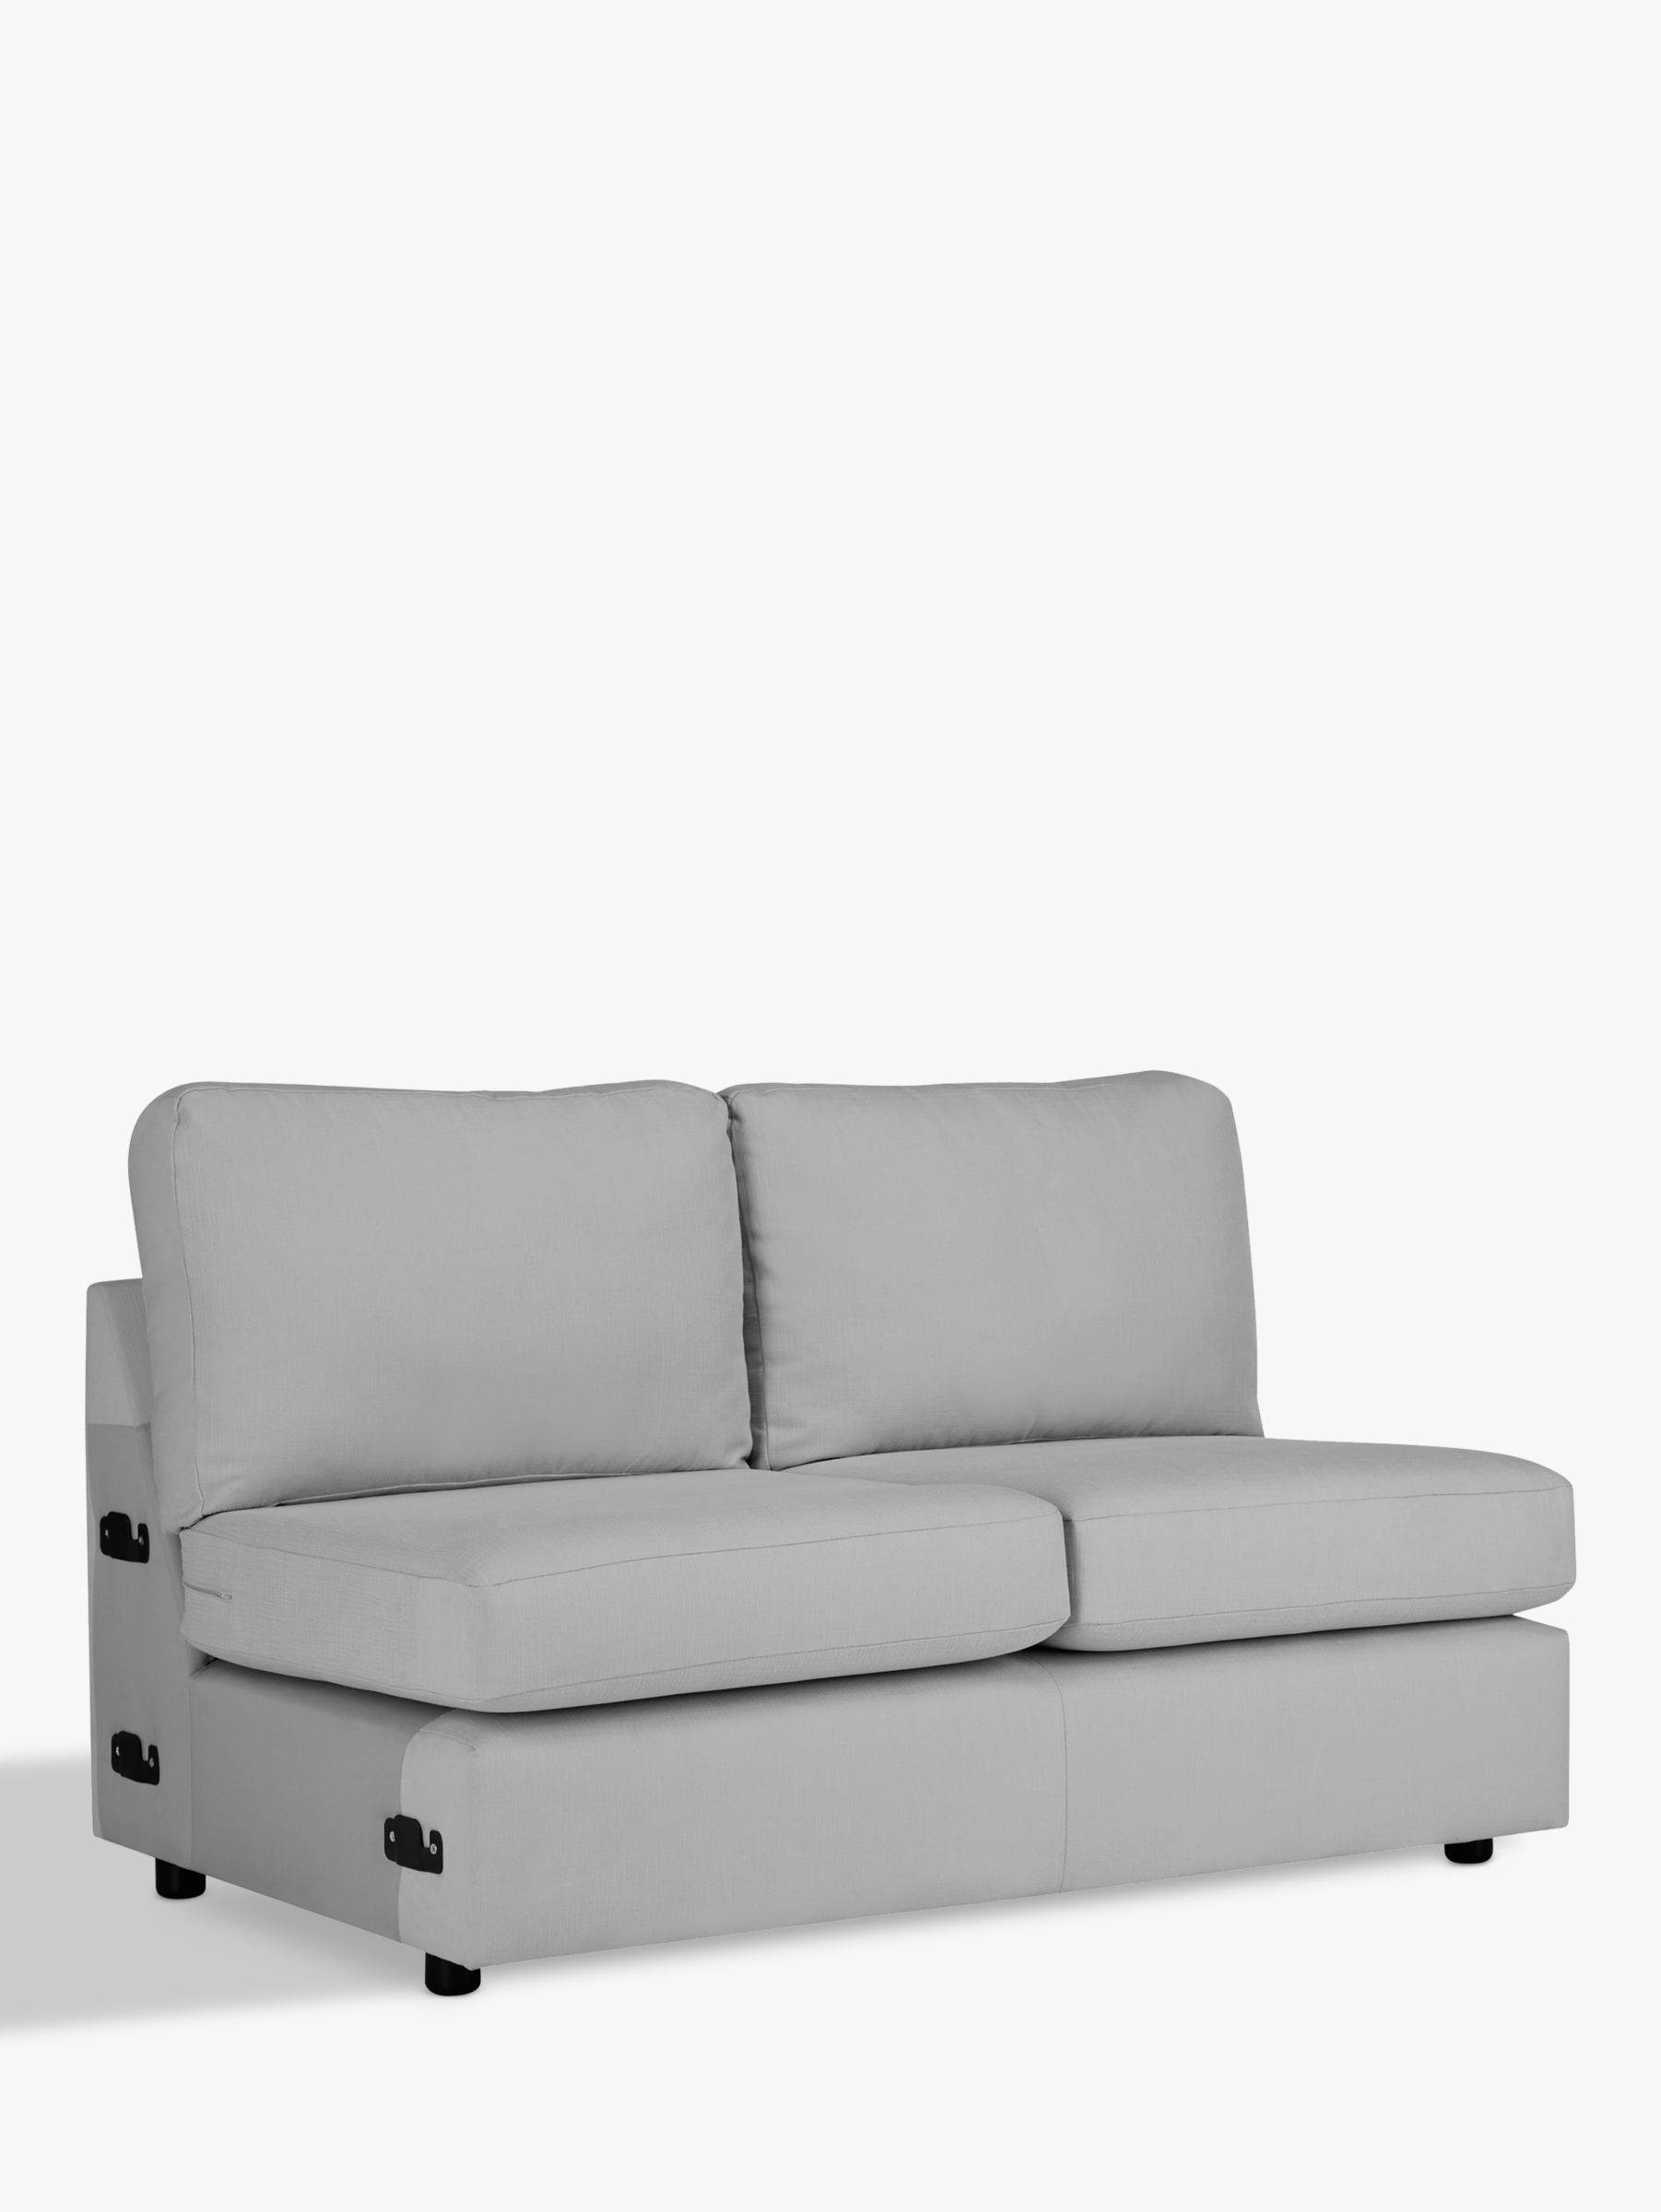 Photo of John lewis oliver modular medium 2 seater armless sofa unit